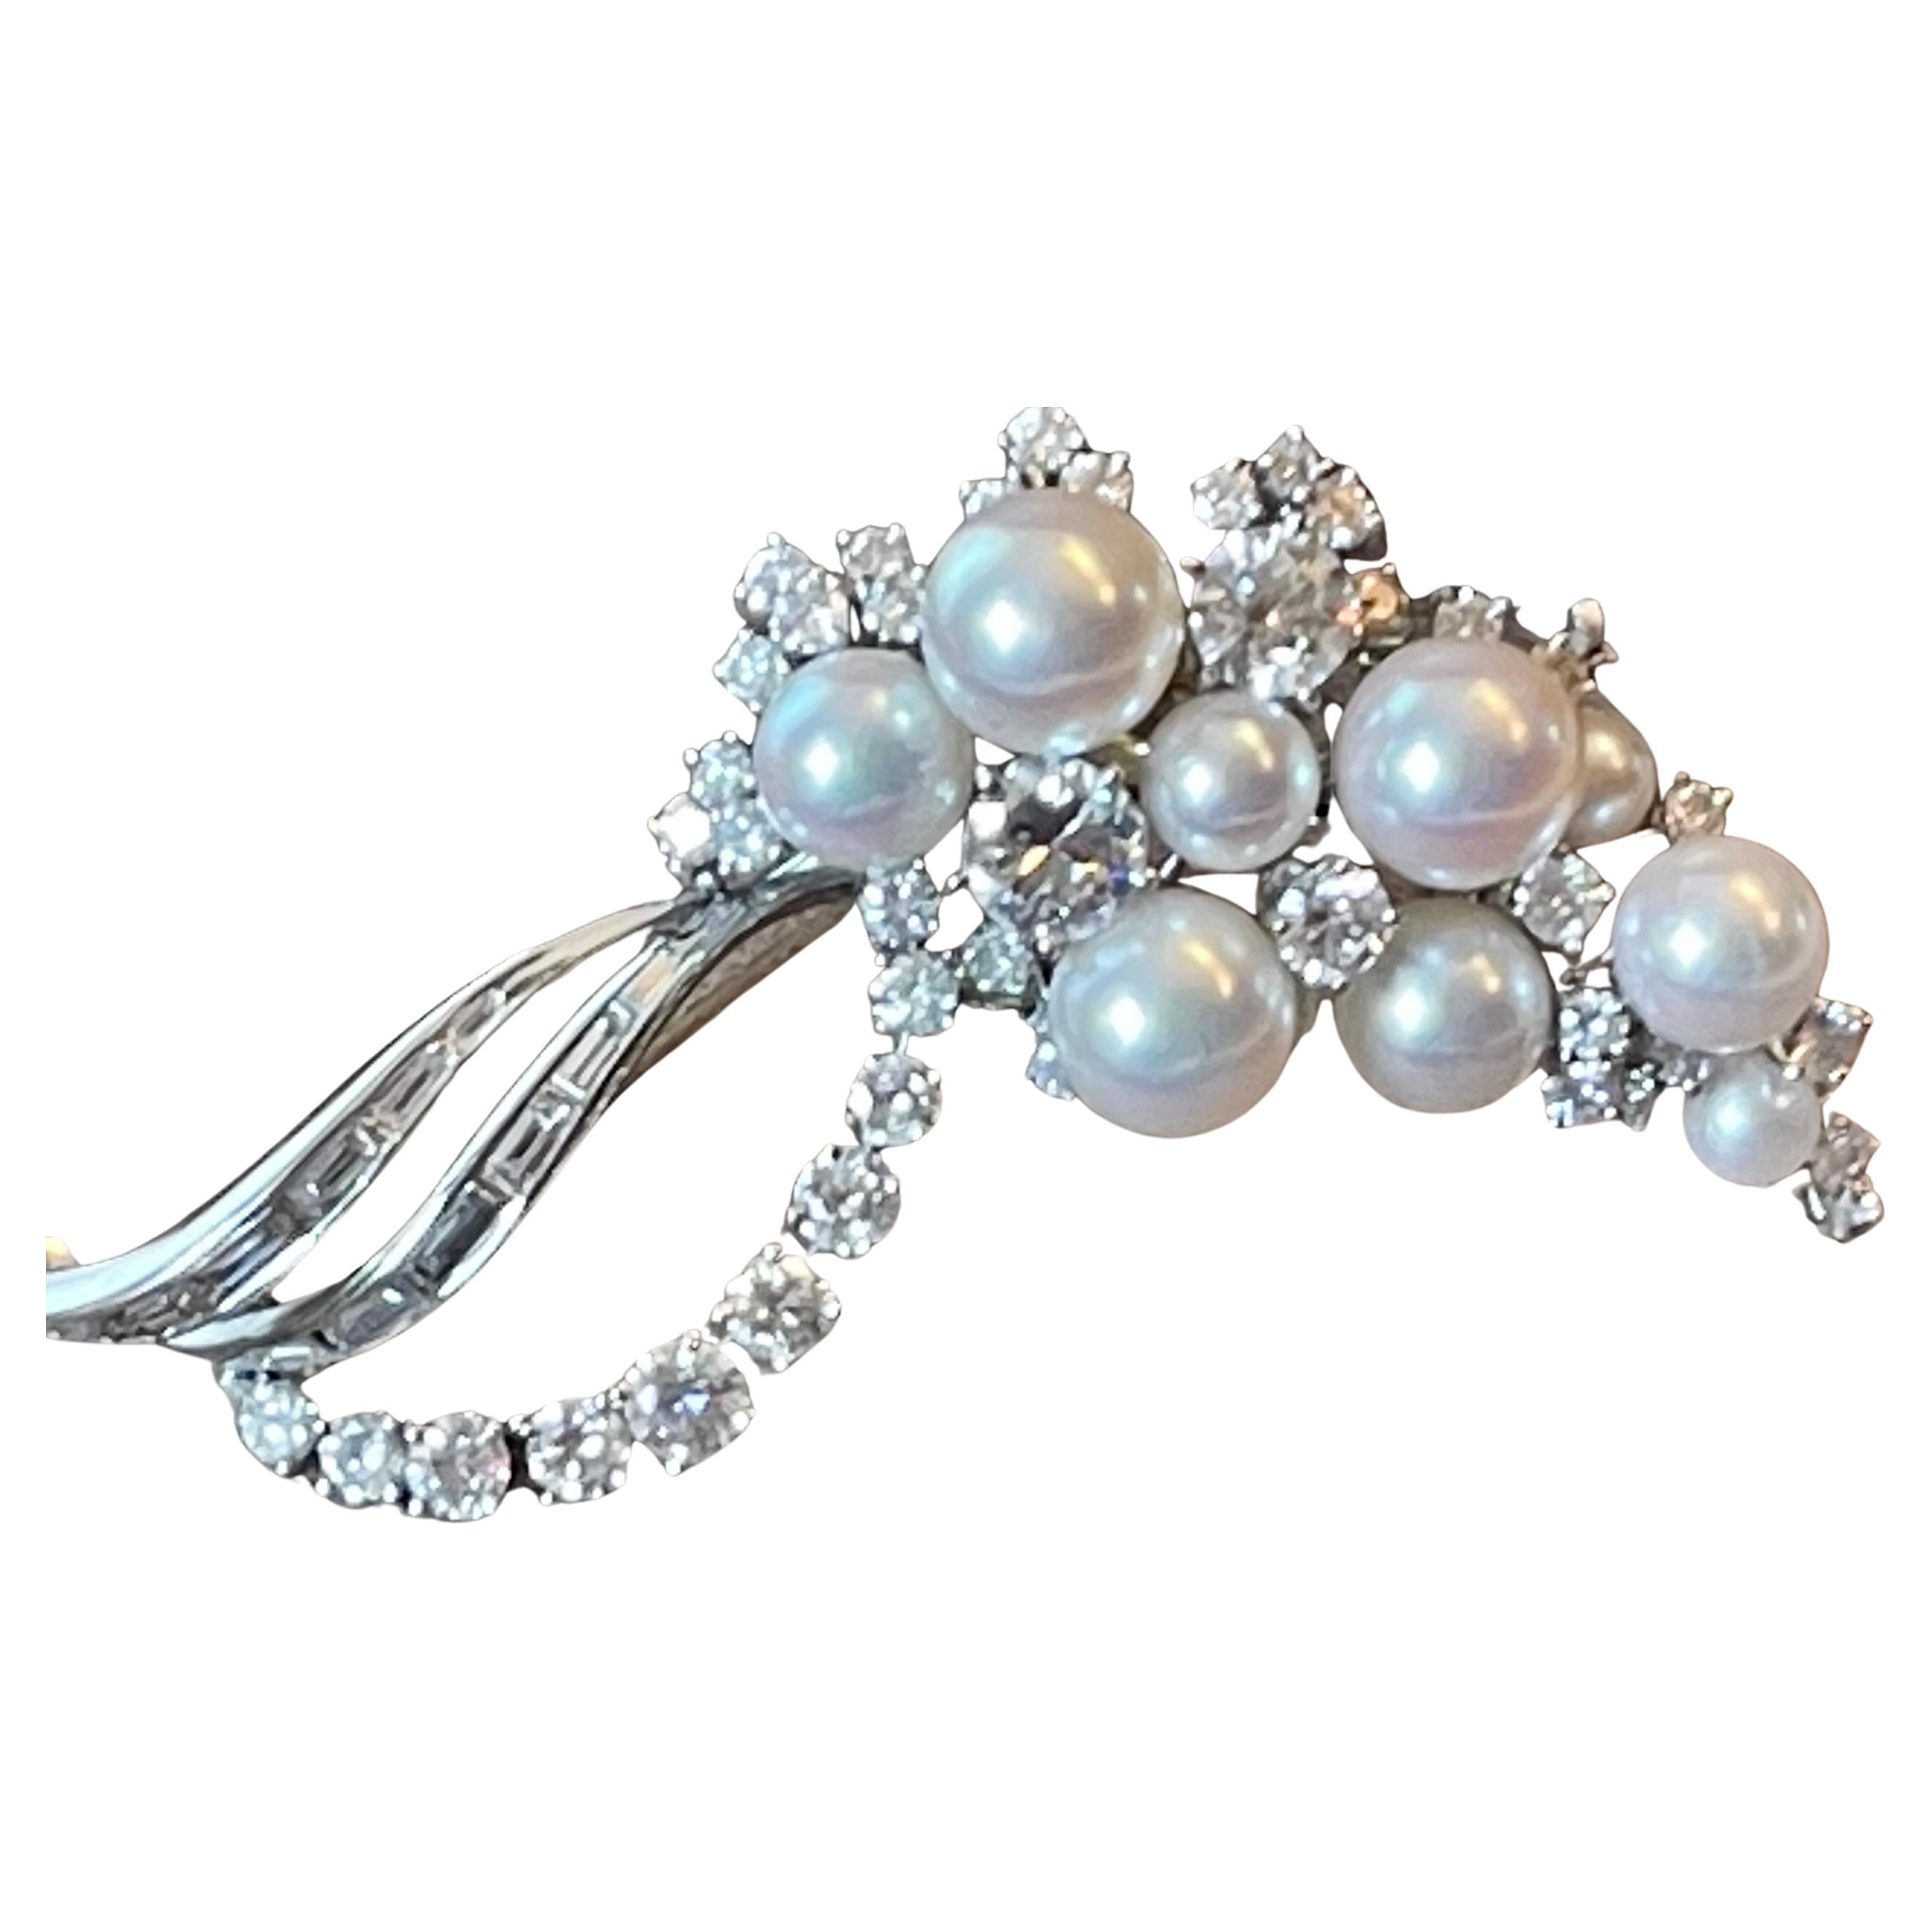 Elegant 18 K White Gold Brooch Diamond Akoya Pearls circa 1970 by Meister Zurich For Sale